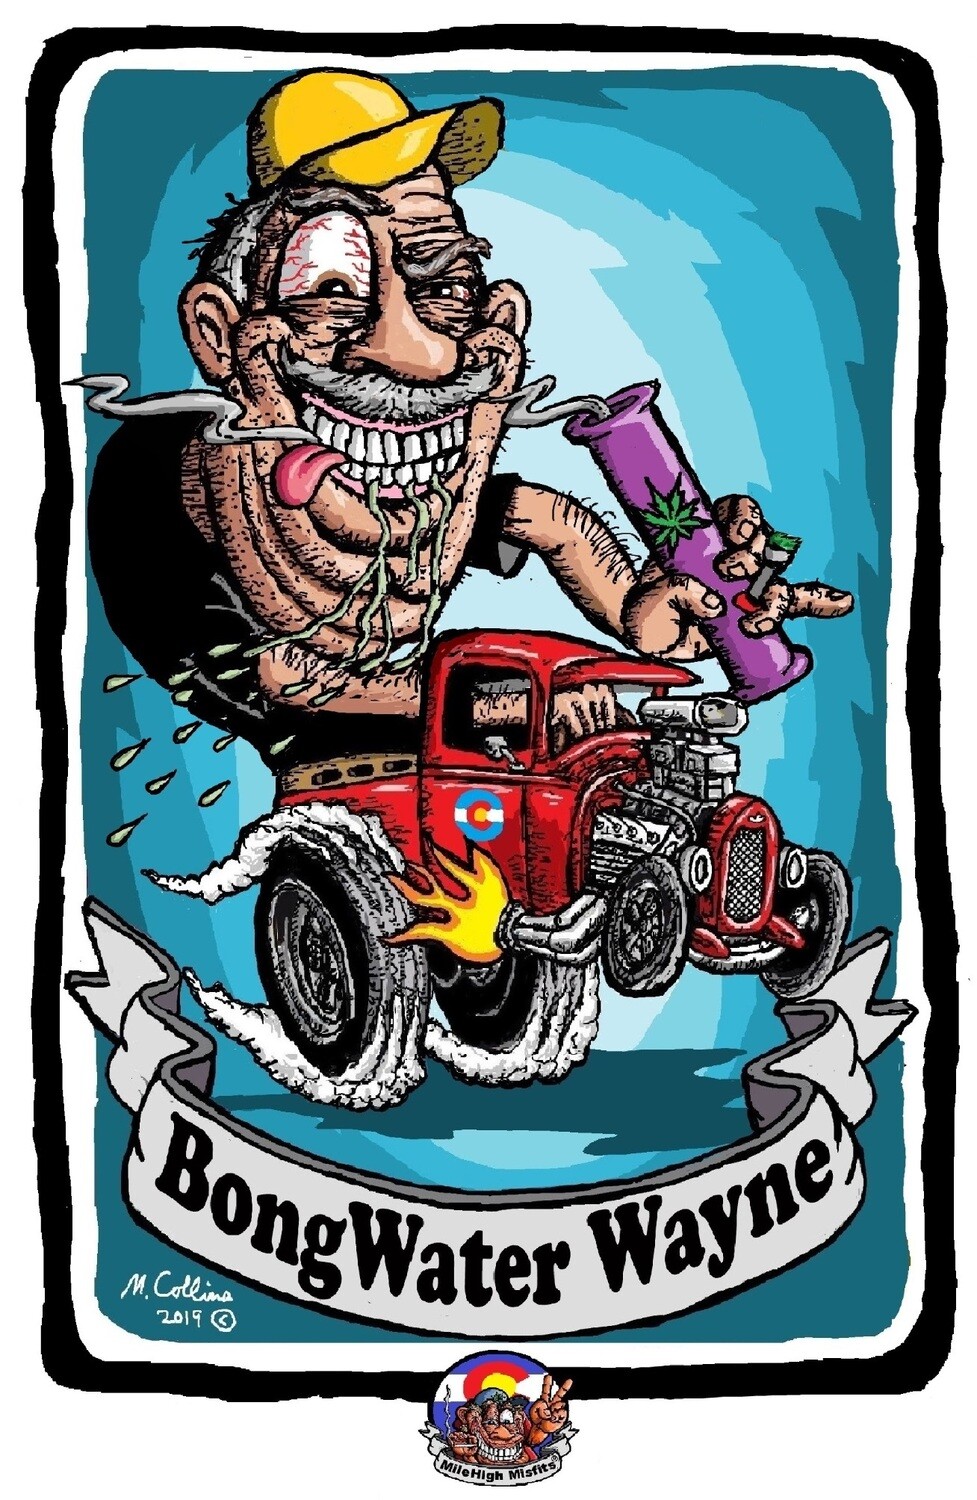 Bong Water Wayne